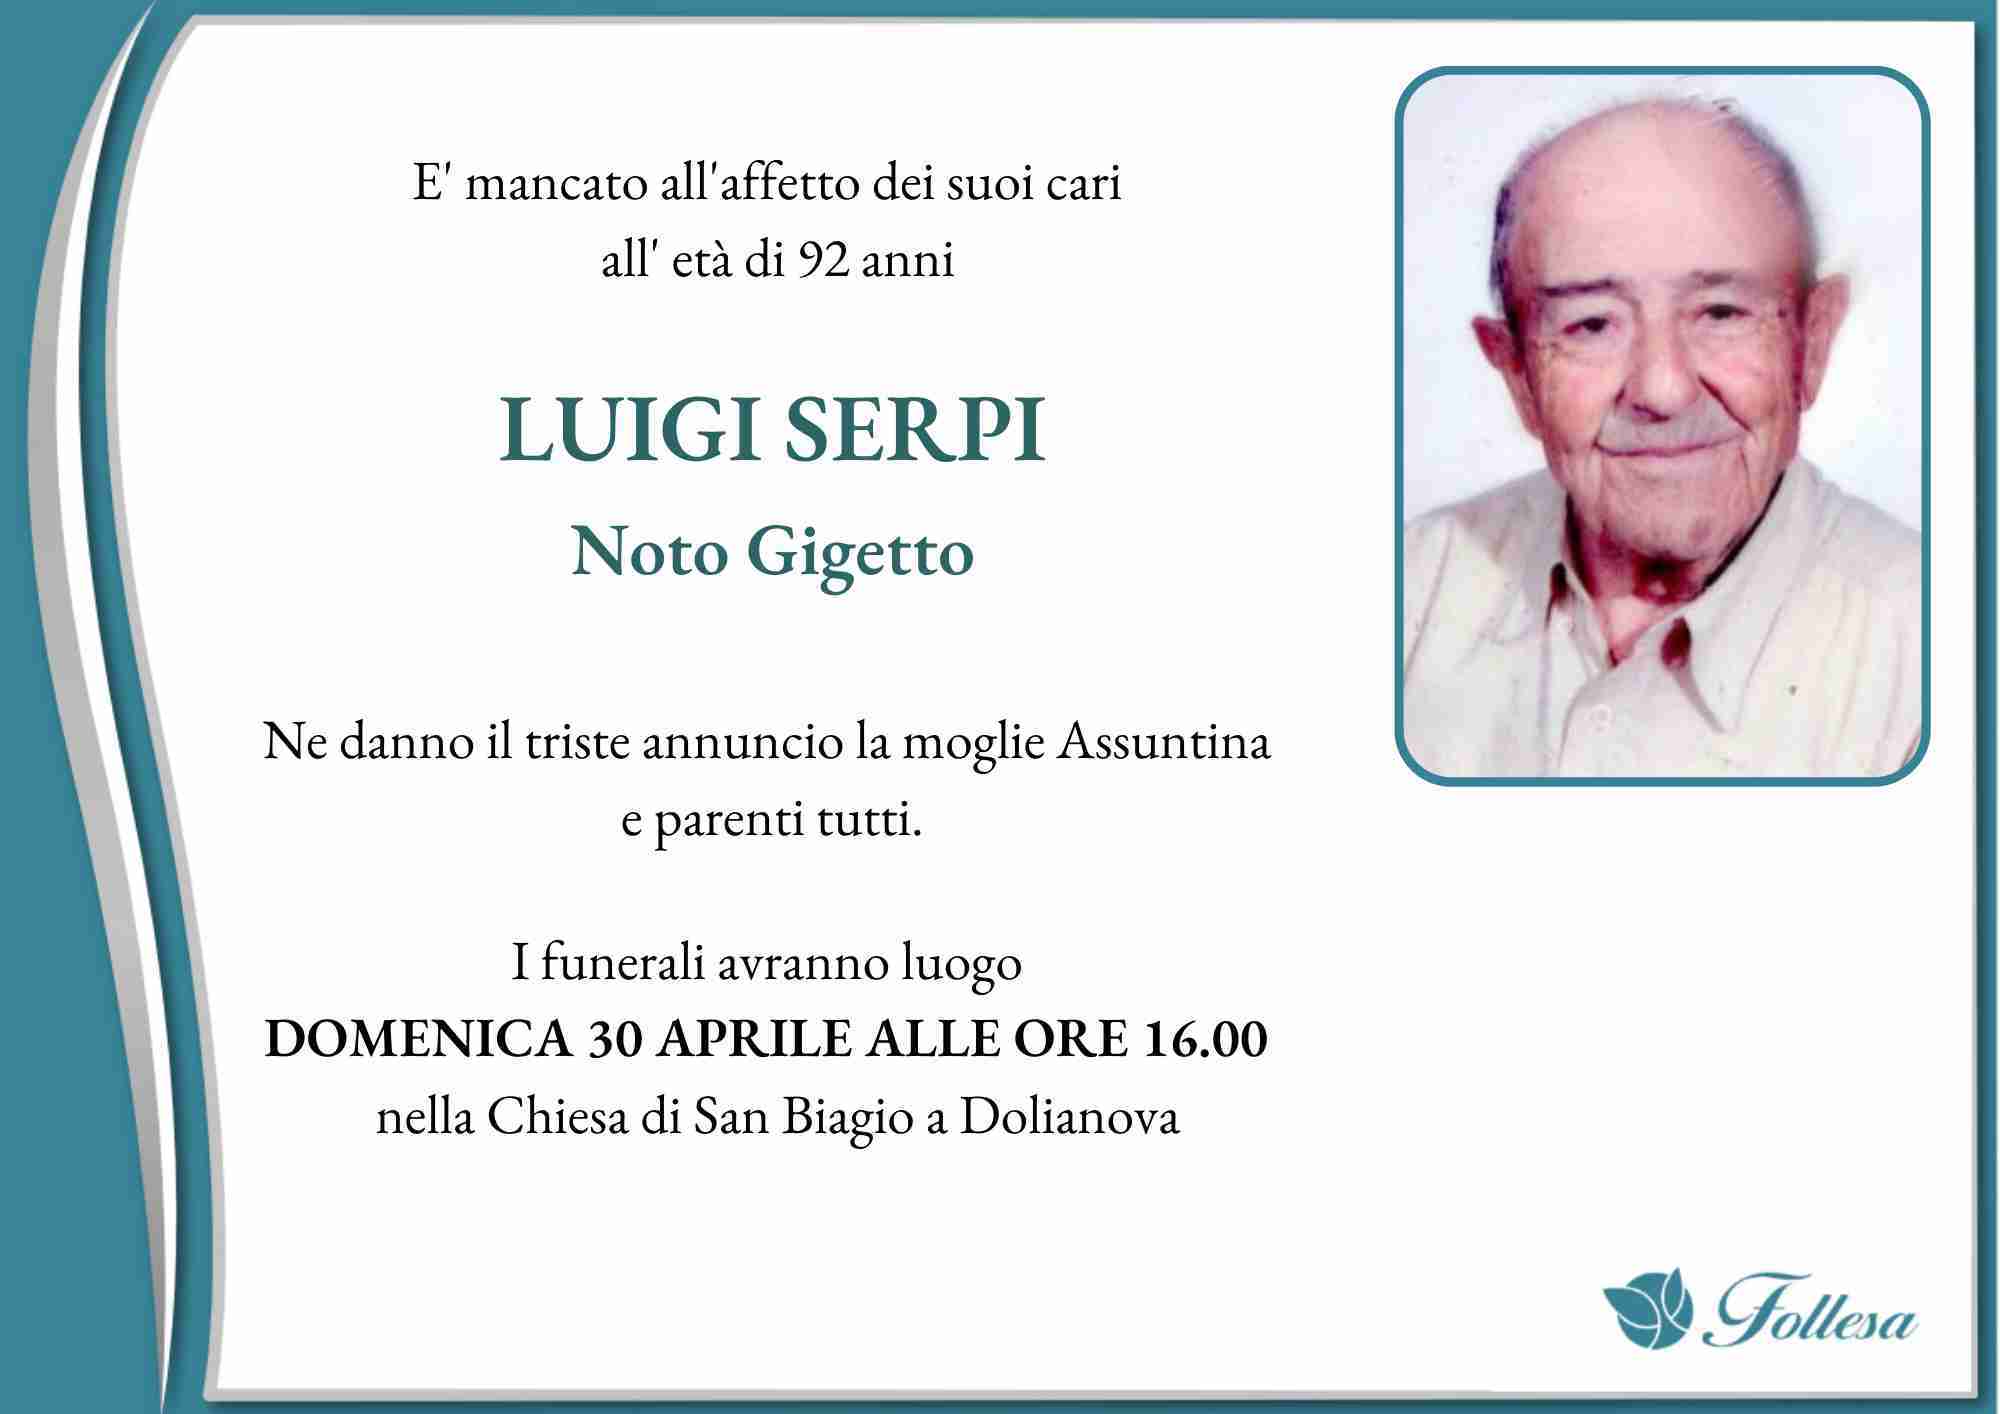 Luigi Serpi